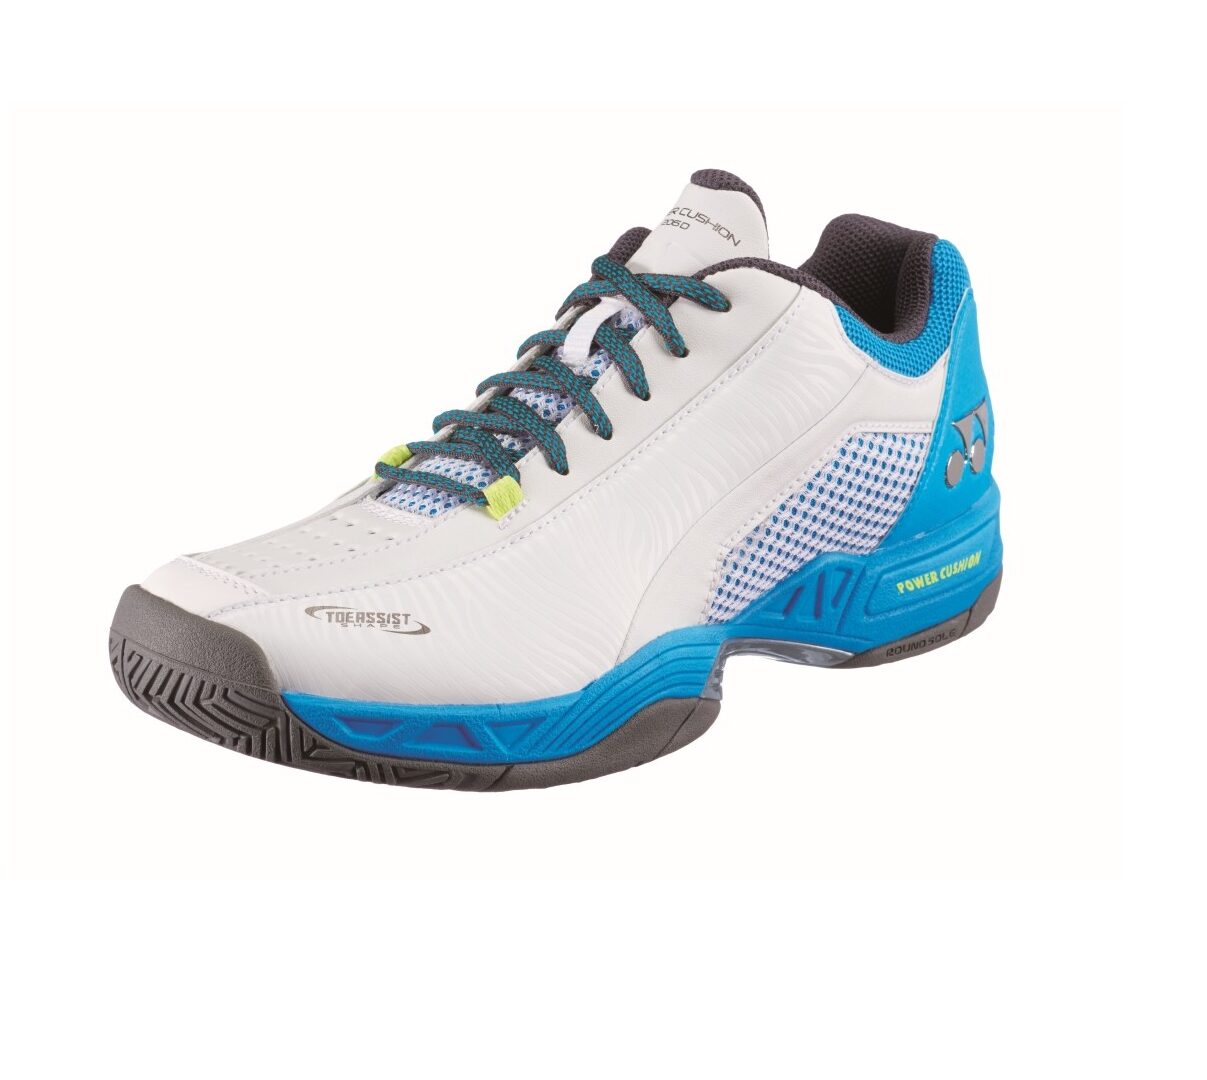 ouder helemaal Trottoir Yonex SHB 3 Durable heren tennisschoen - wit / blauw